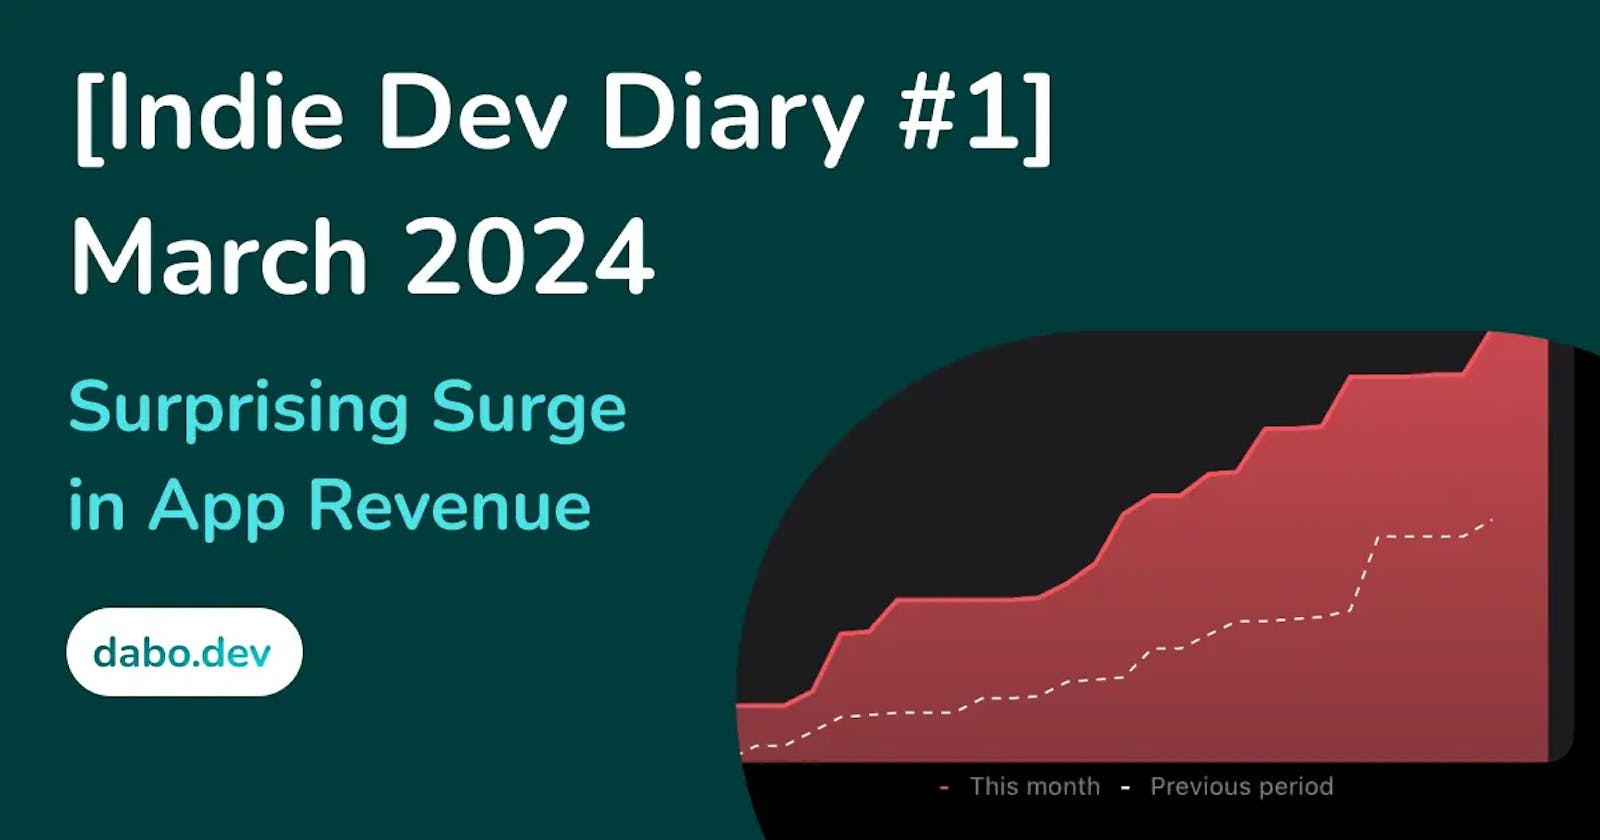 [Indie Dev Diary #1] March 2024 - Surprising Surge in App Revenue